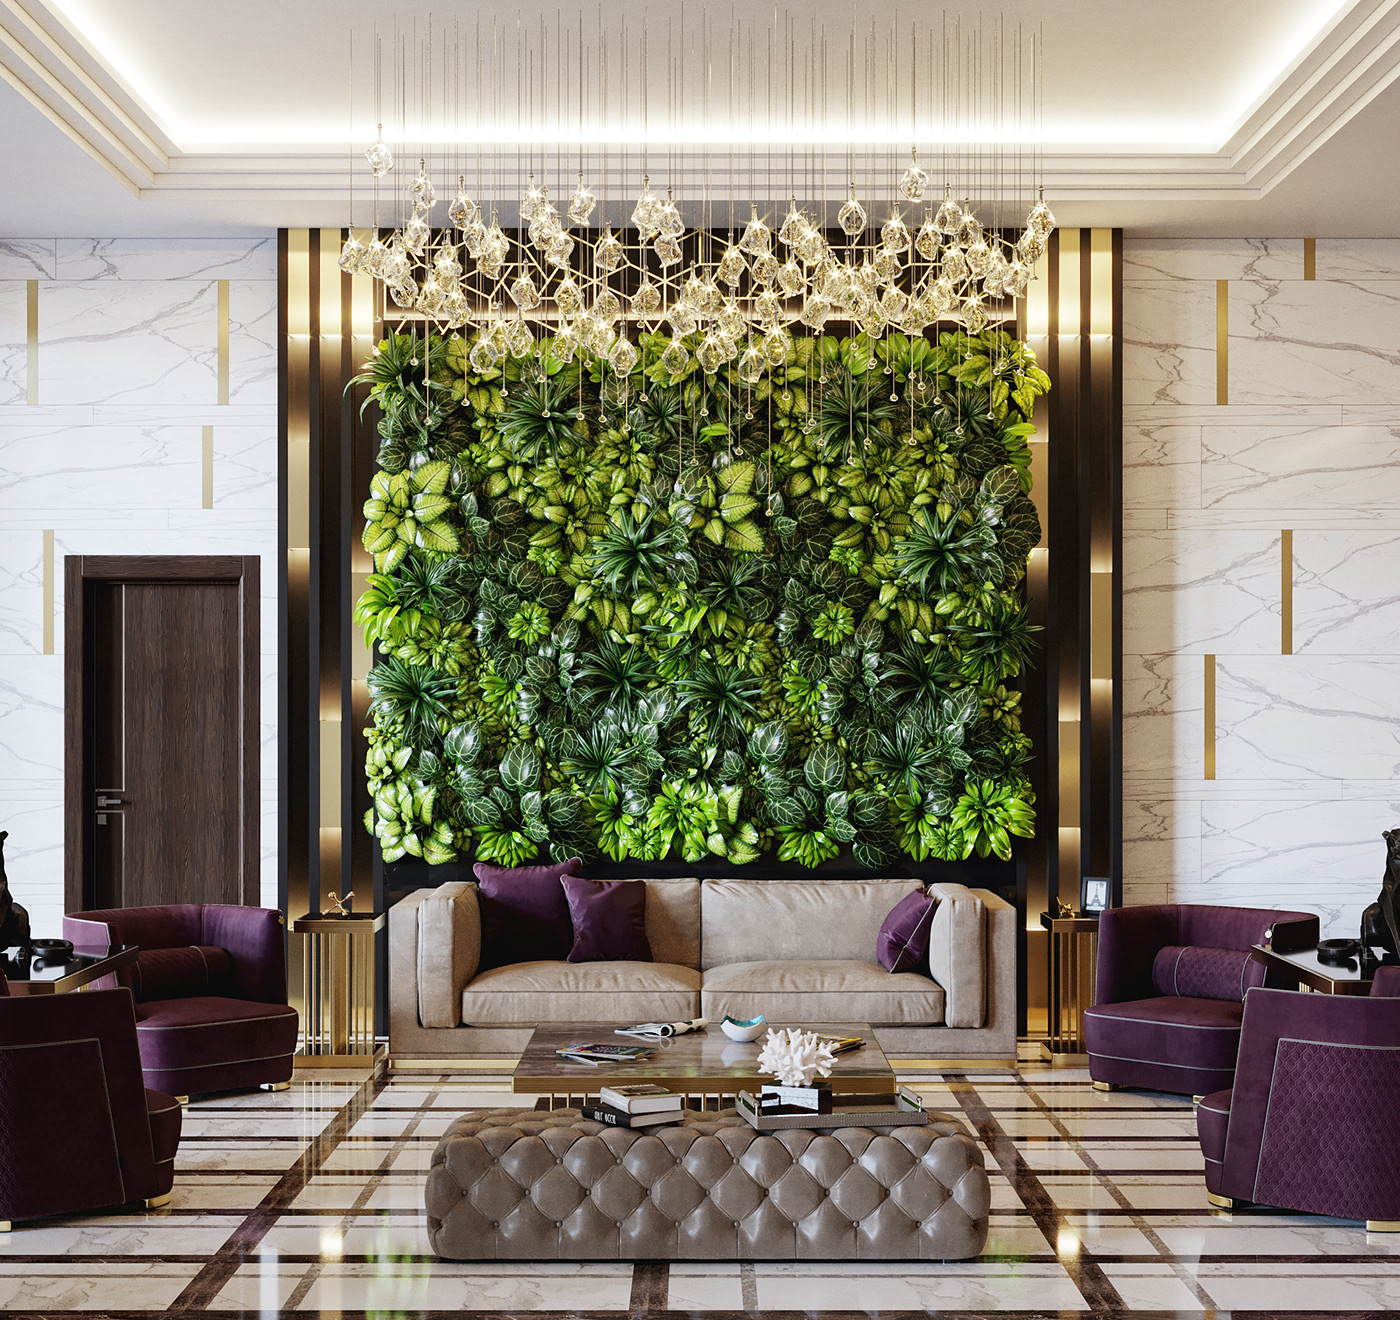 3dsmax baku CGI corona renderer hotel interior design  luxury reception Render visualization